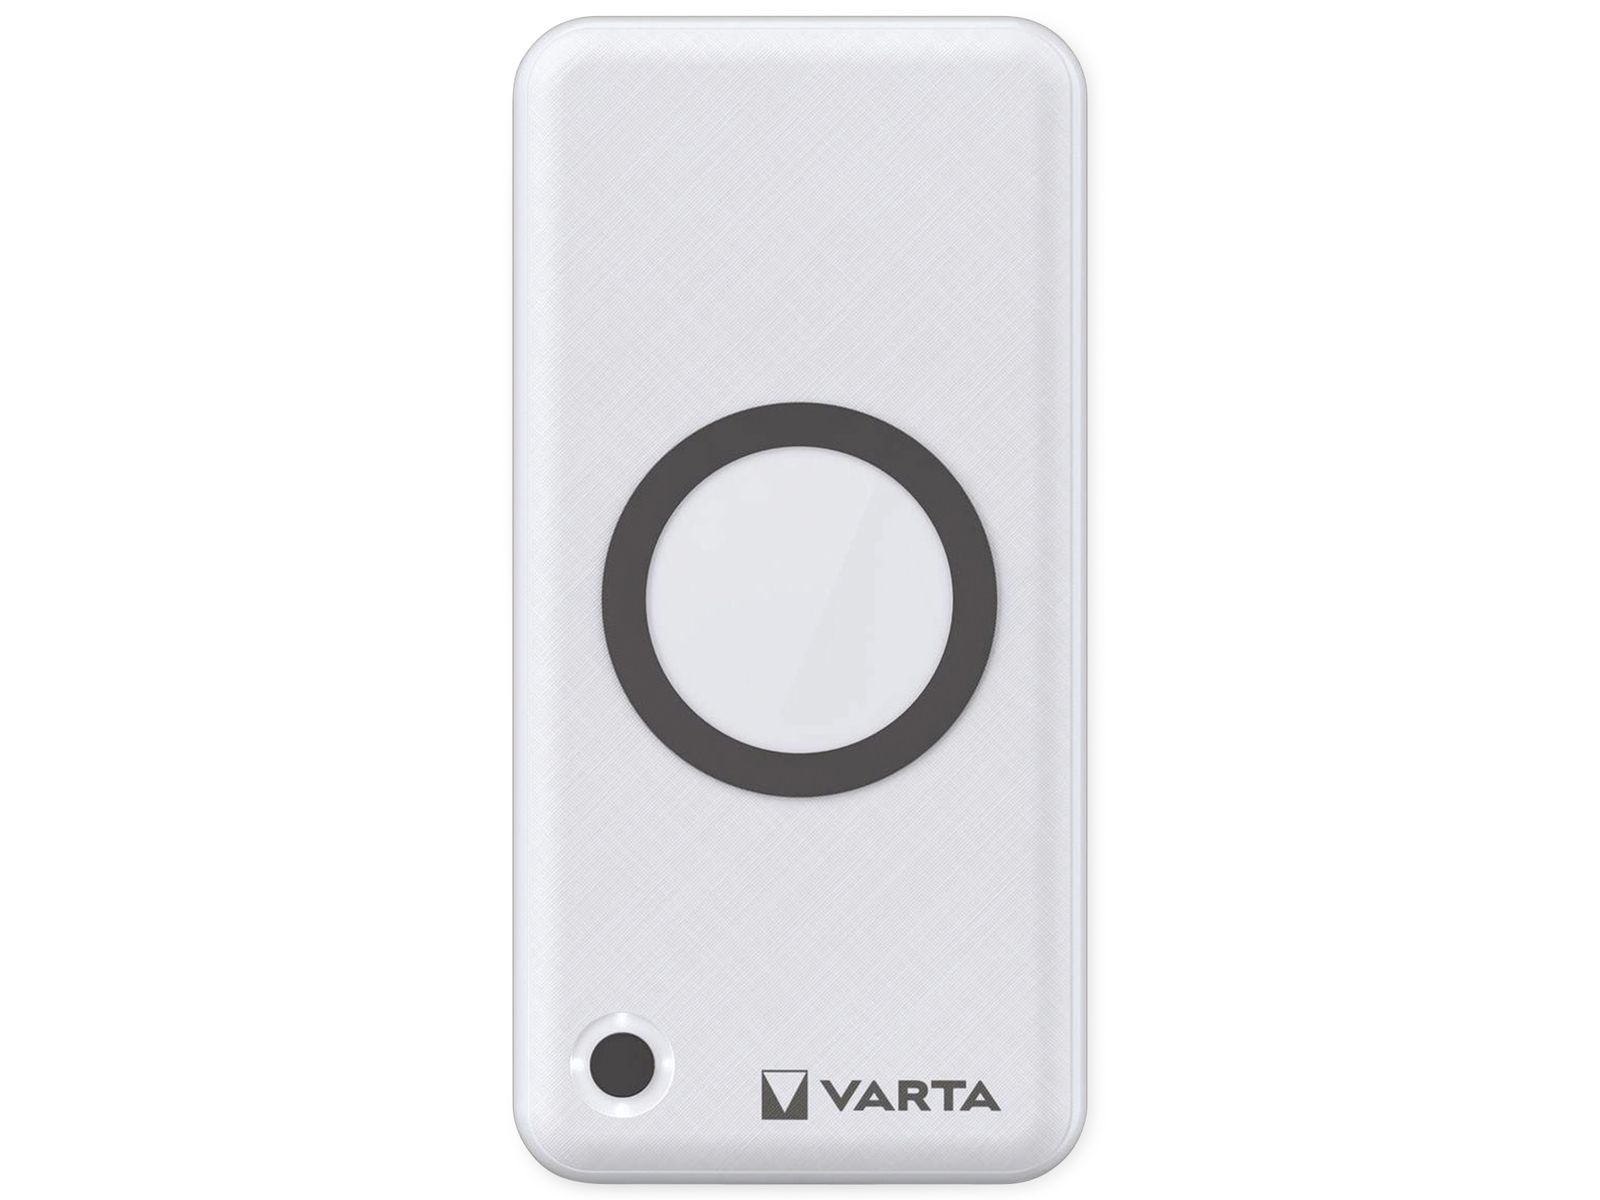 VARTA USB-Powerbank Wireless, 15.000mAh, mit Ladekabel von Varta